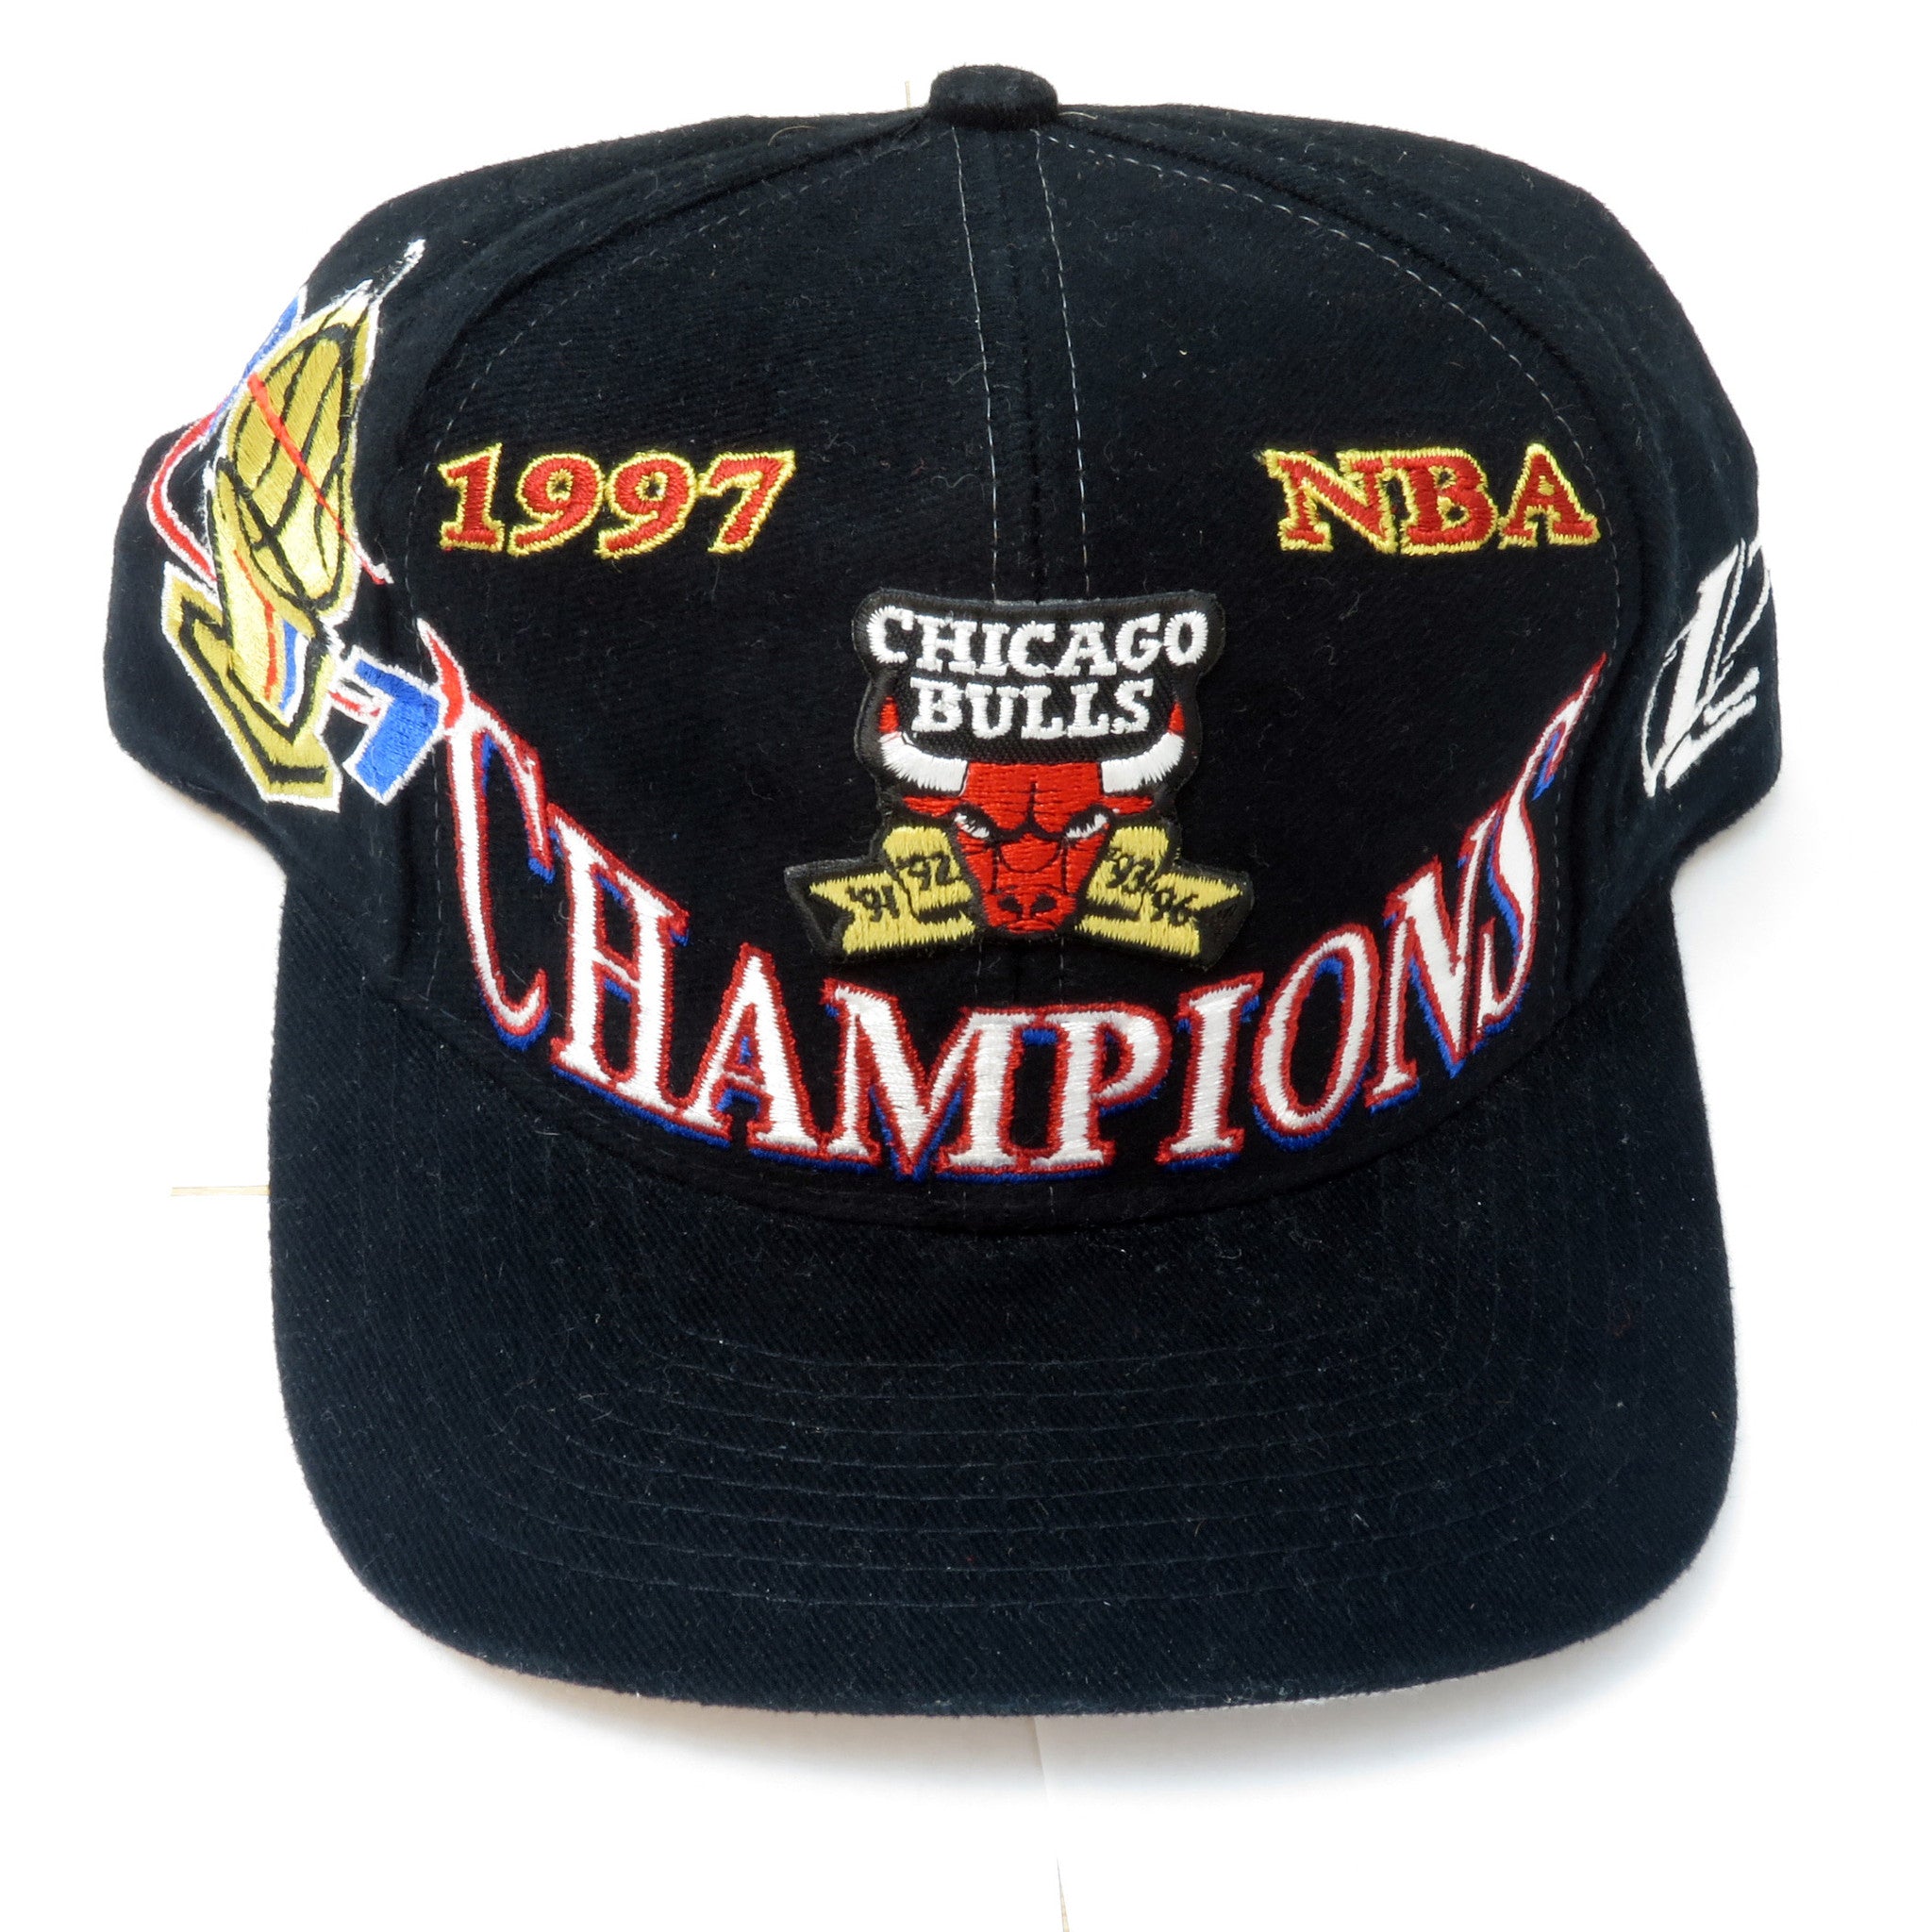 1997 Chicago Bulls NBA Champions Snapback Hat